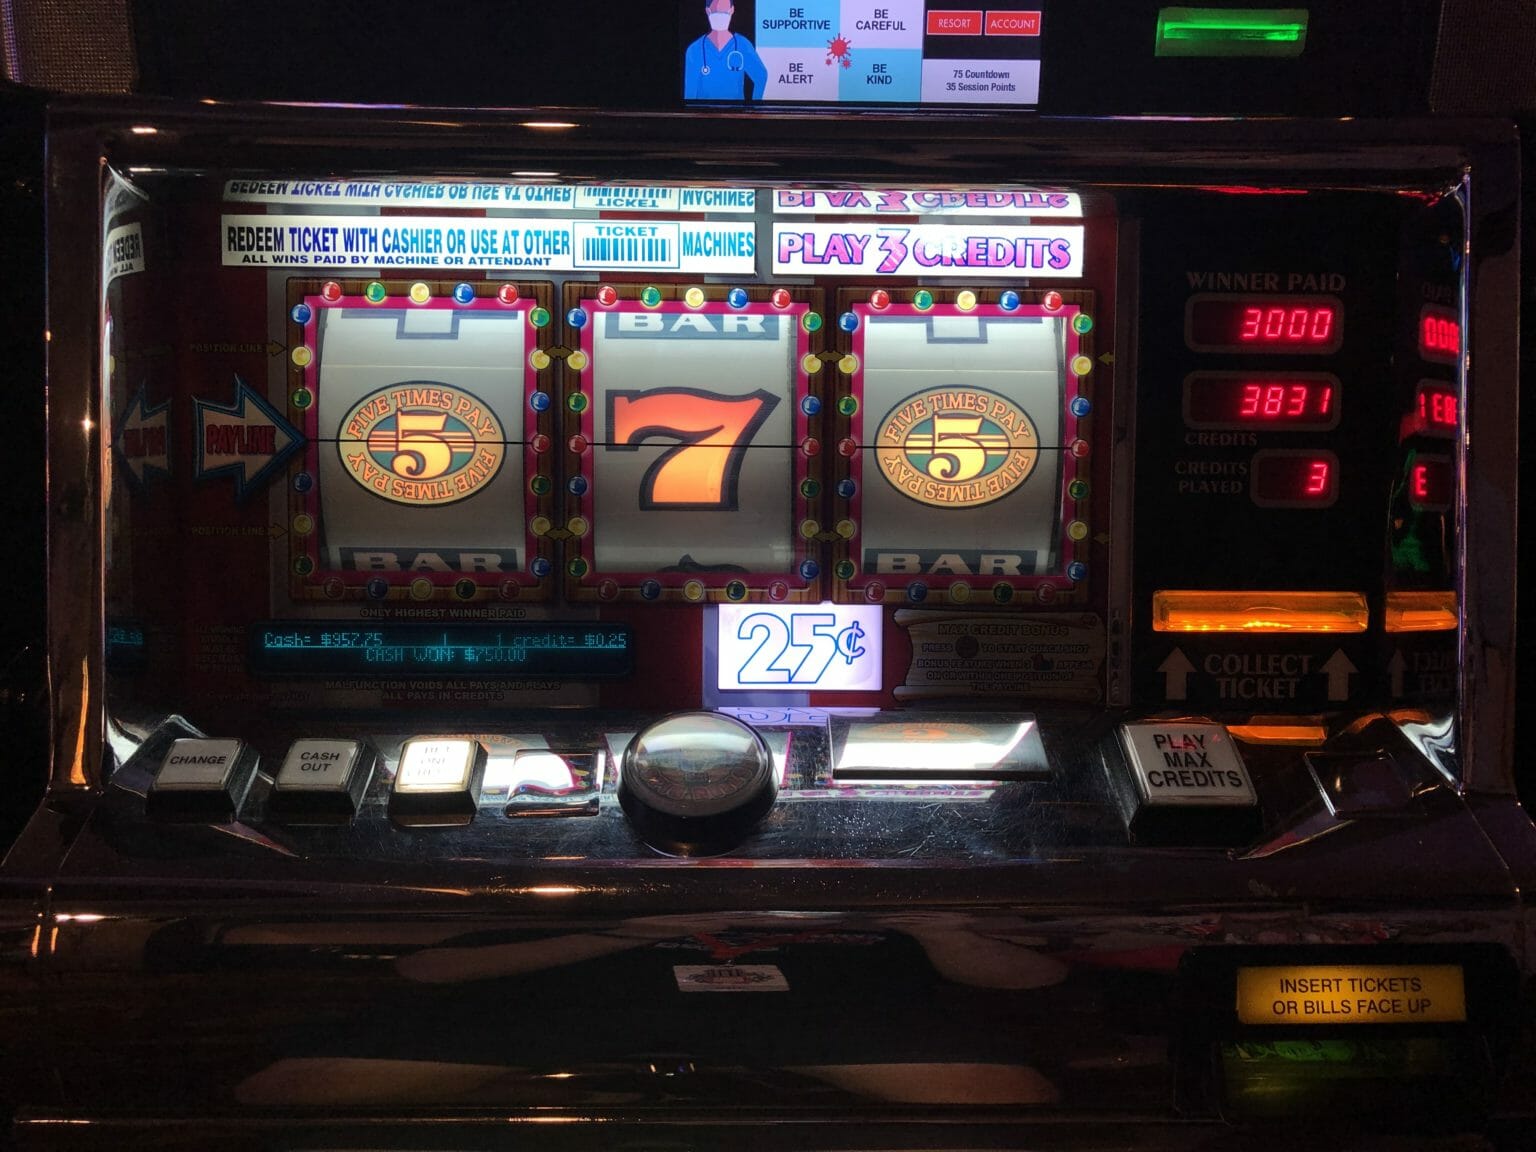 slot machine reels